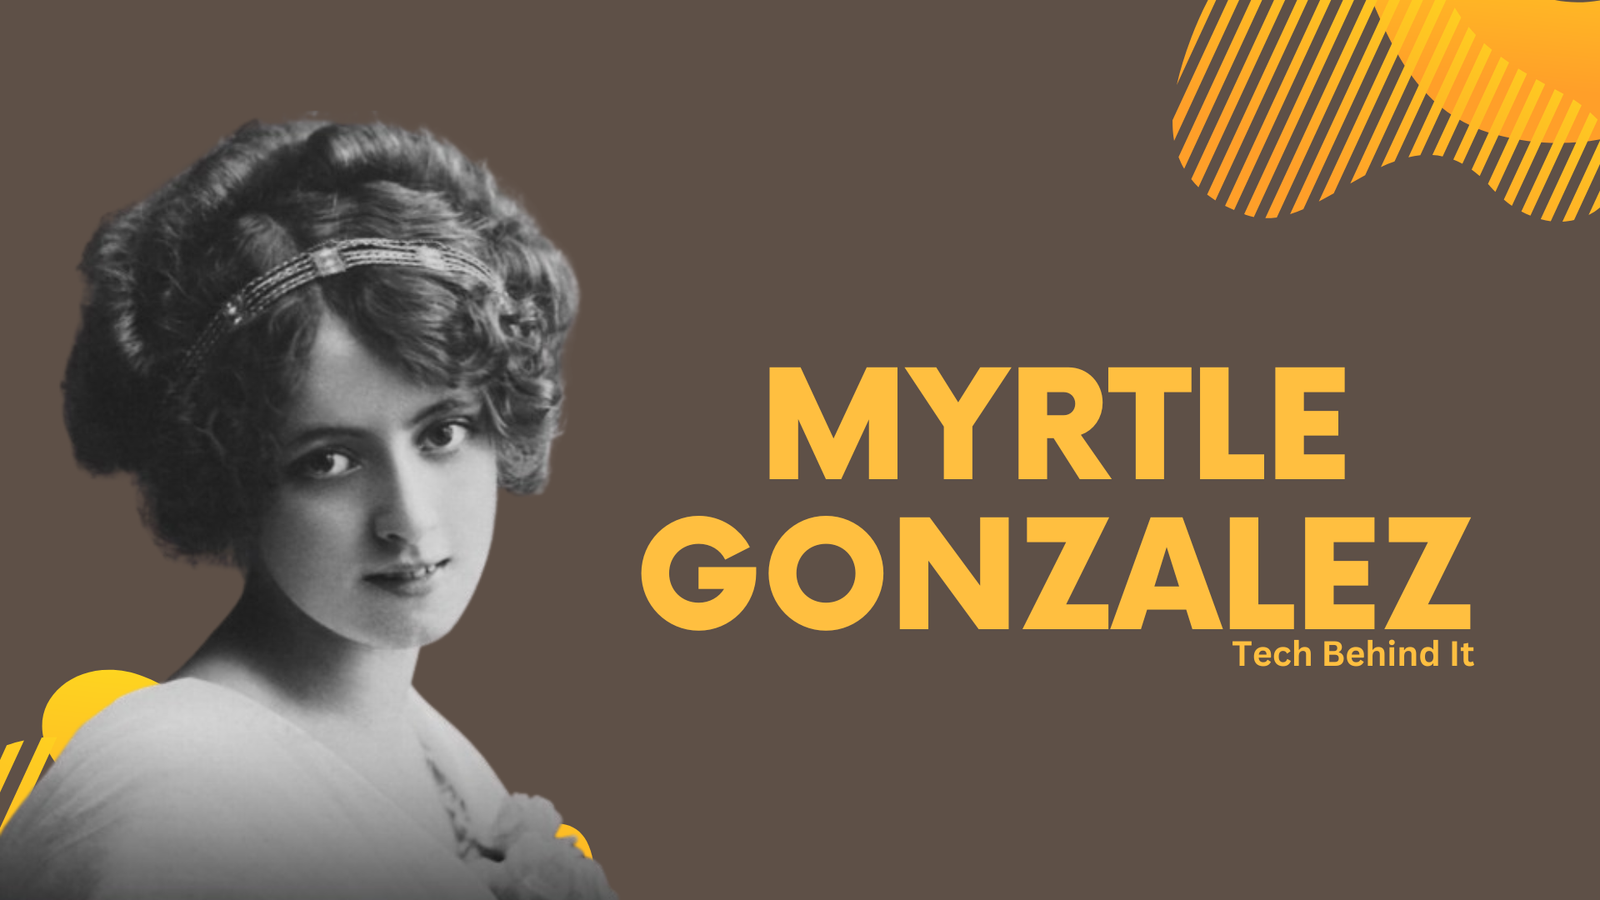 Myrtle Gonzalez: The Star Actress of the Silent Era